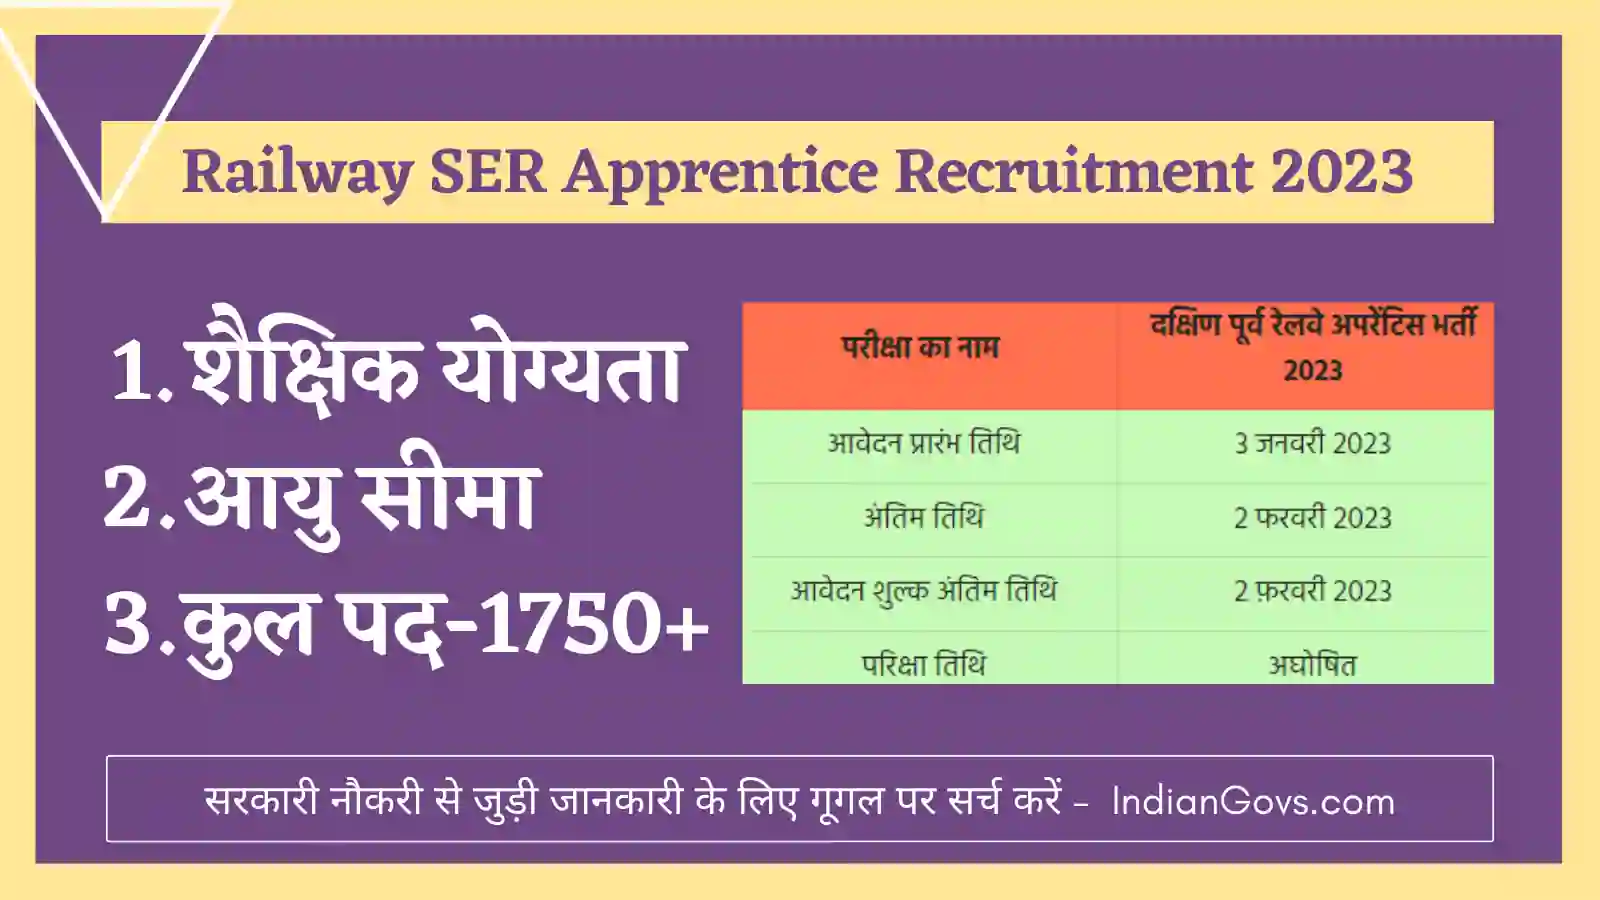 Railway SER Apprentice Recruitment 2023